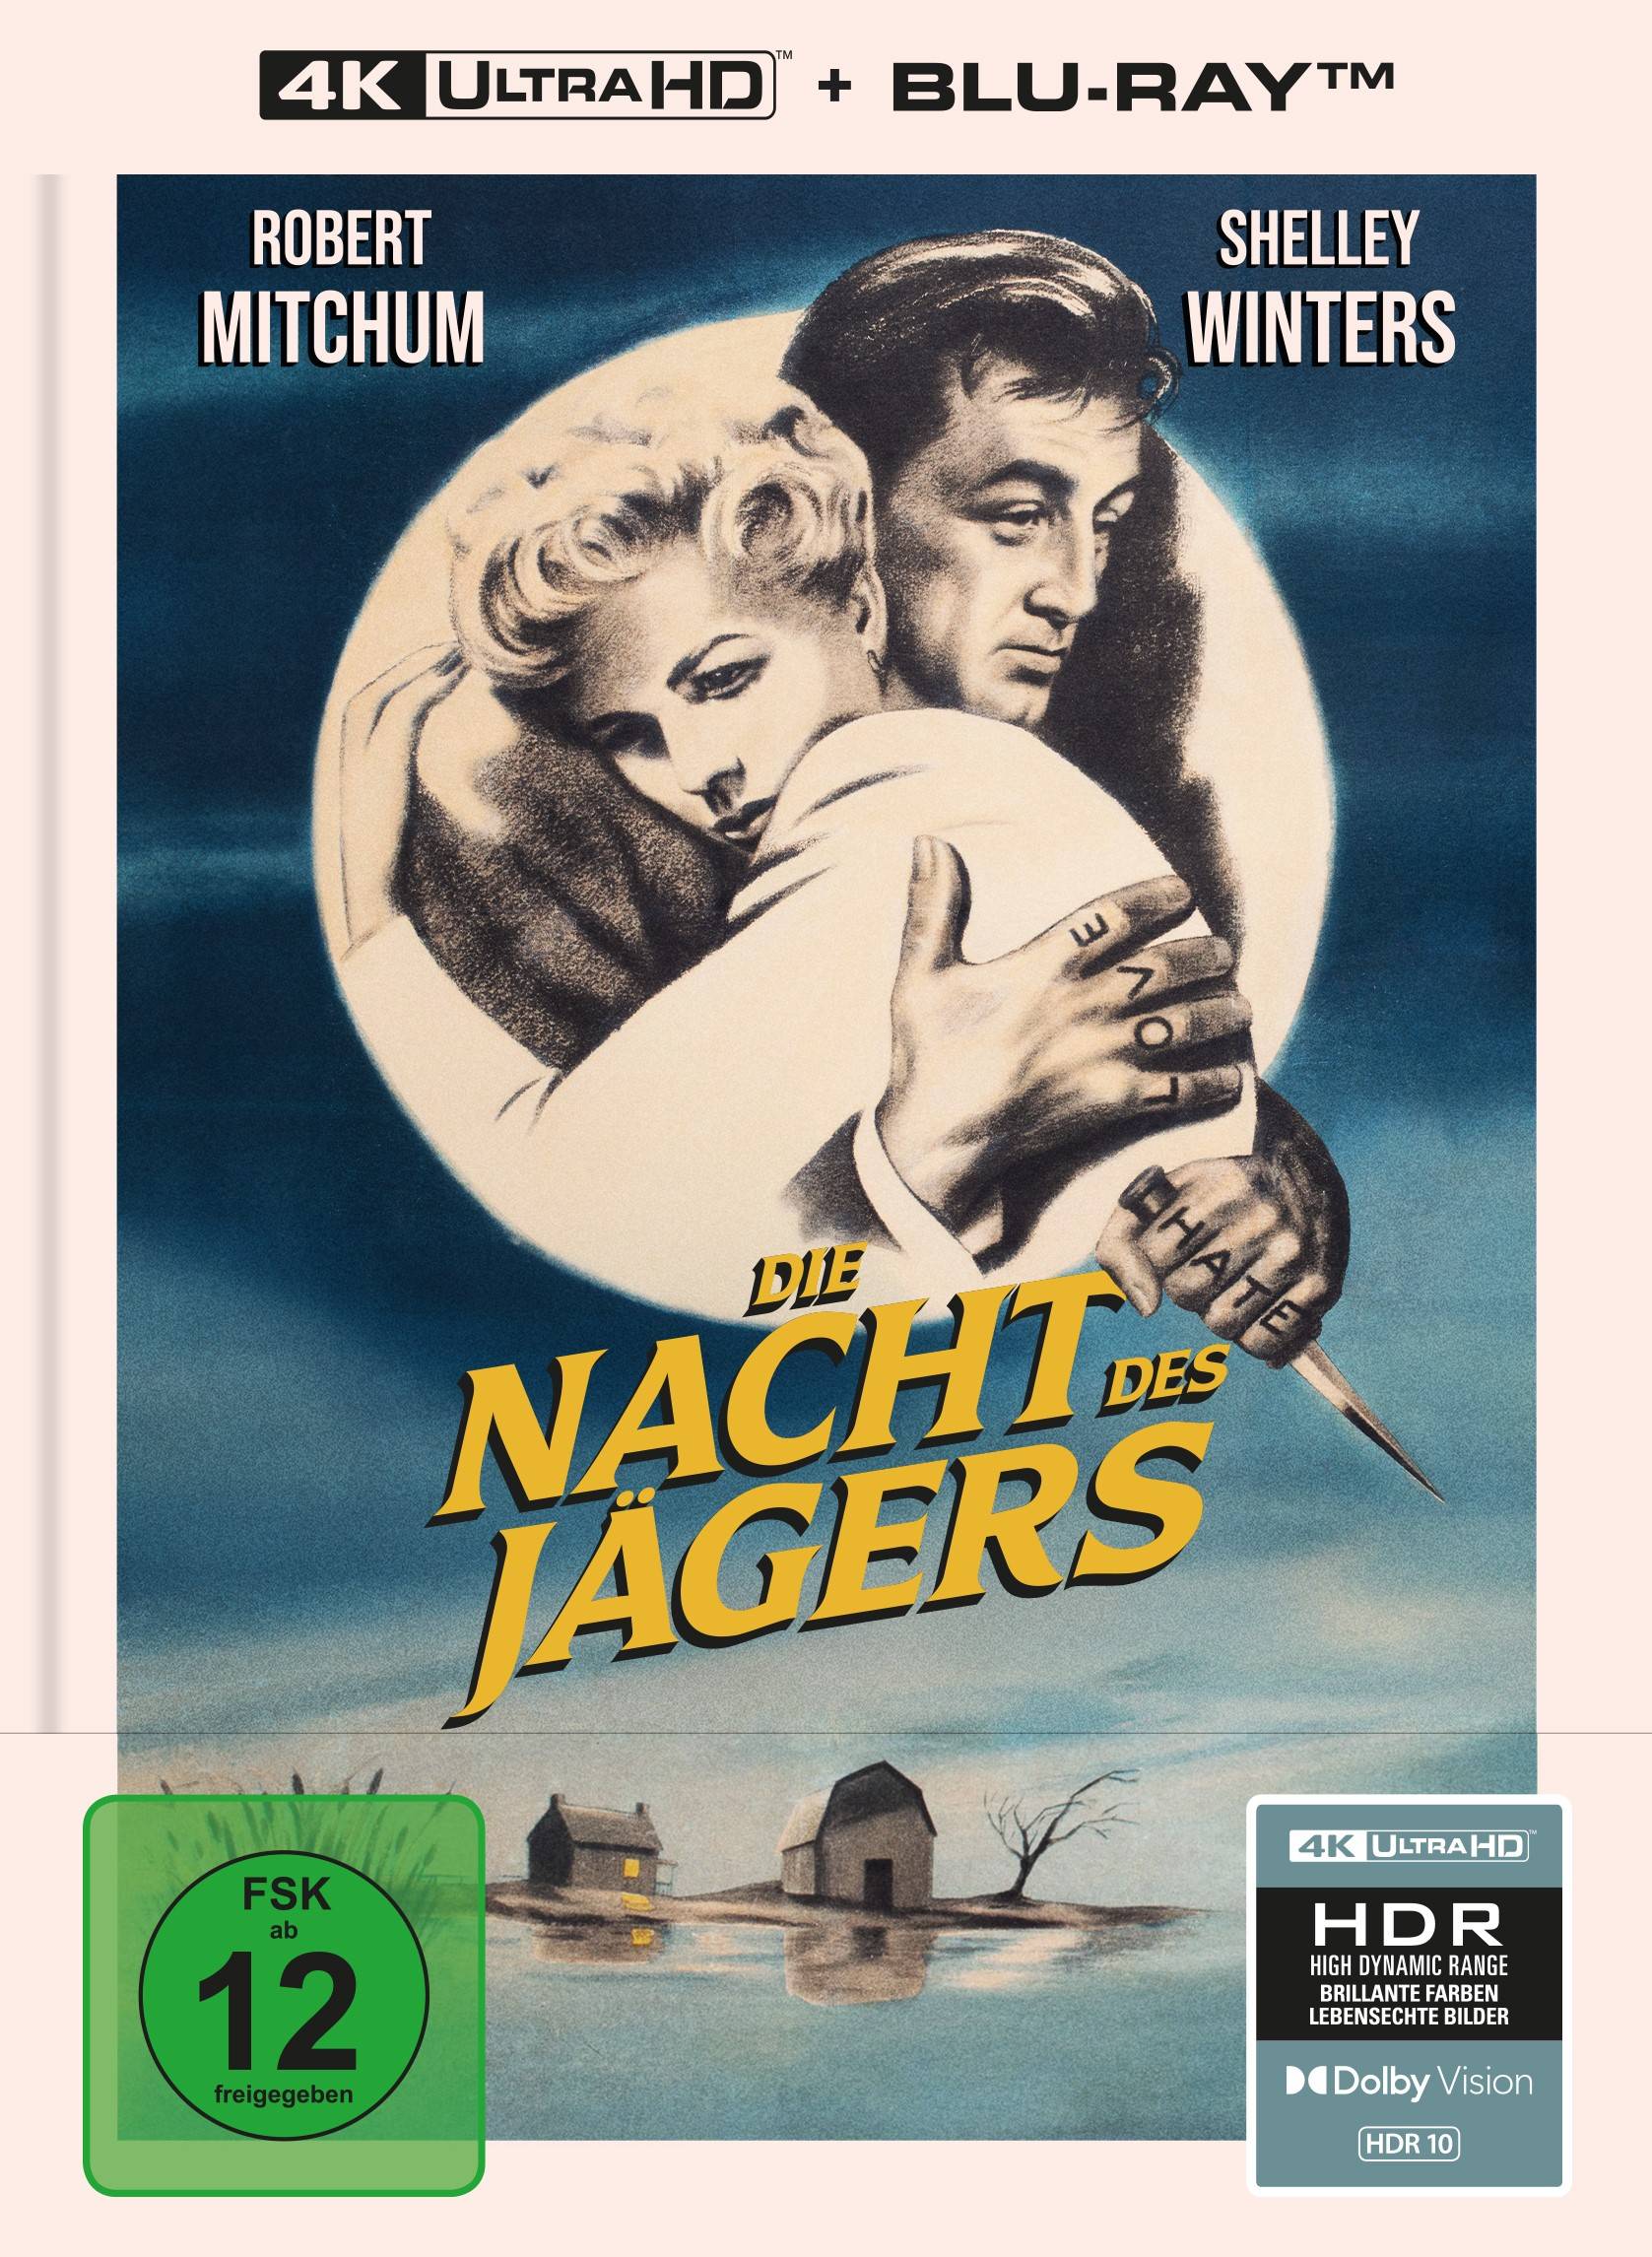 Die Nacht des Jägers - 2-Disc Limited Collector's Edition im Mediabook (UHD-Blu-ray + Blu-ray)